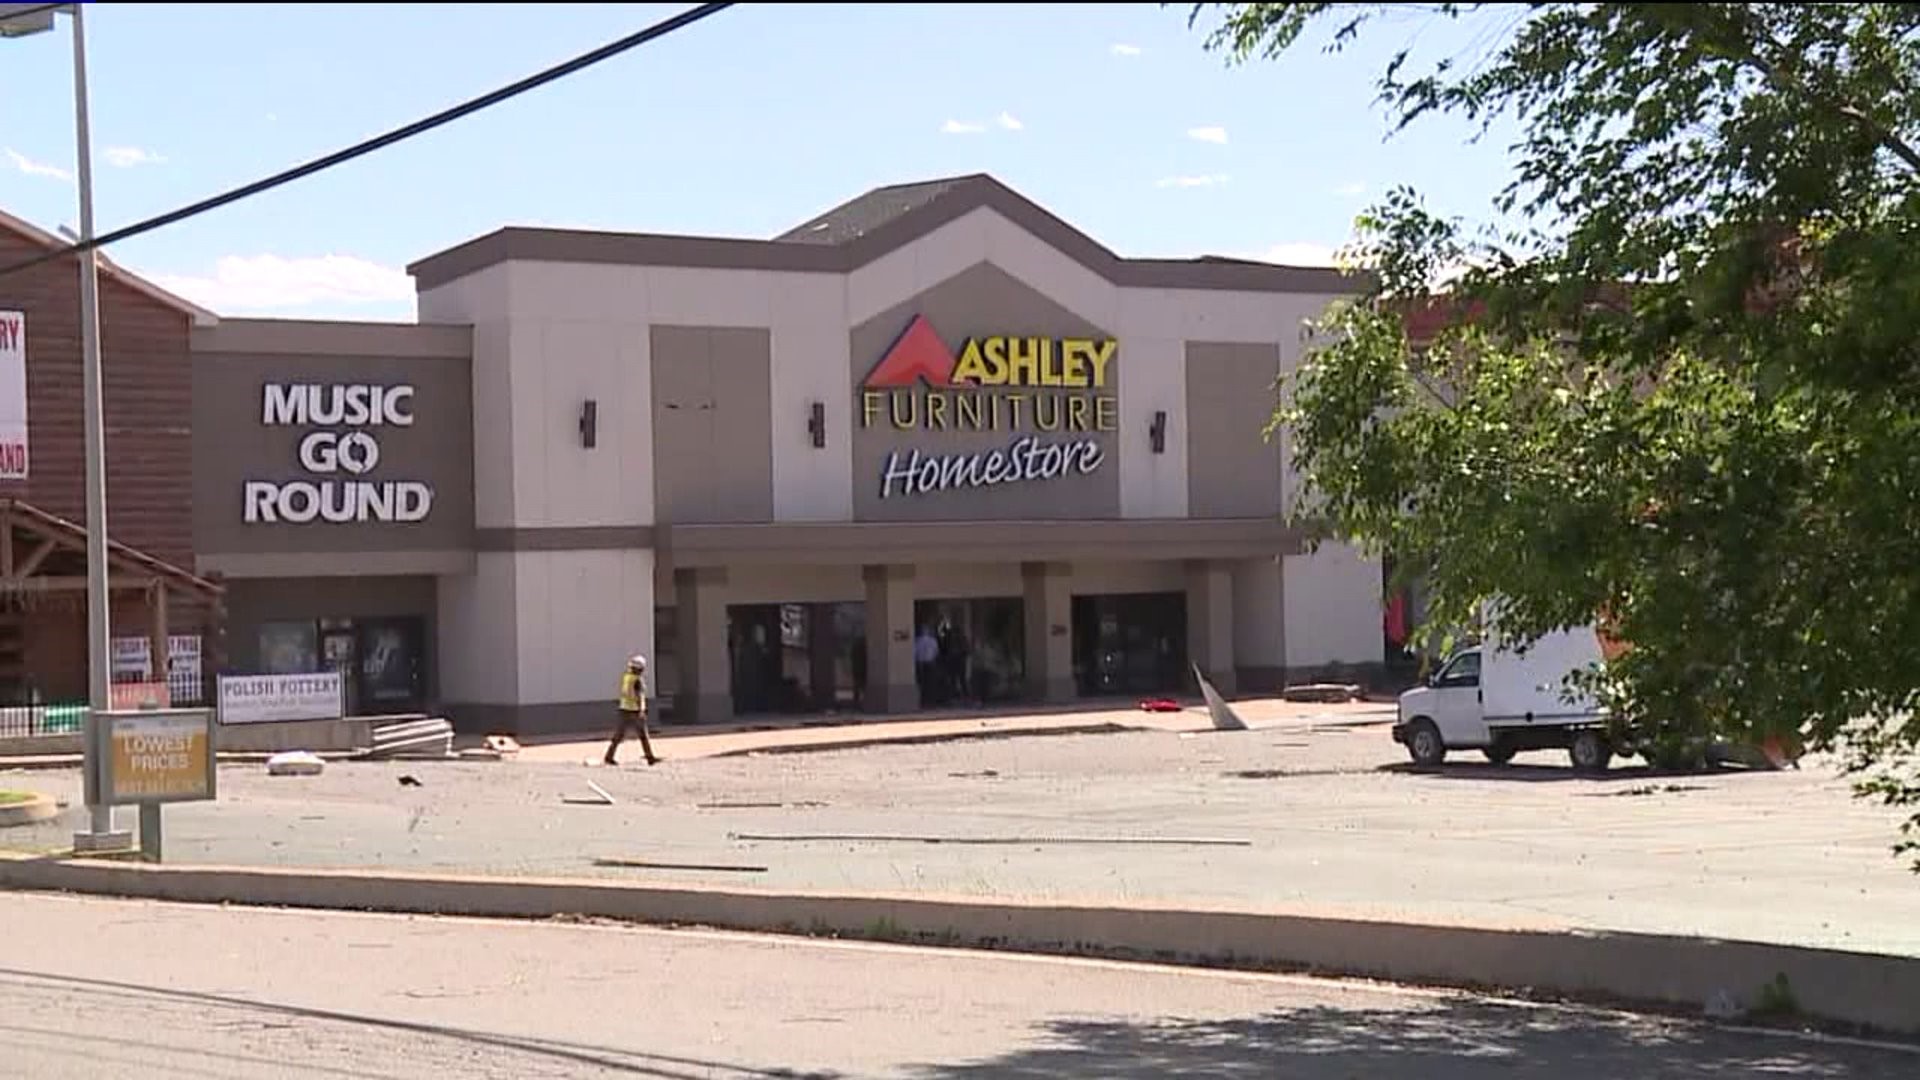 Tent Sale Set for Ashley Home Furniture Store After Tornado